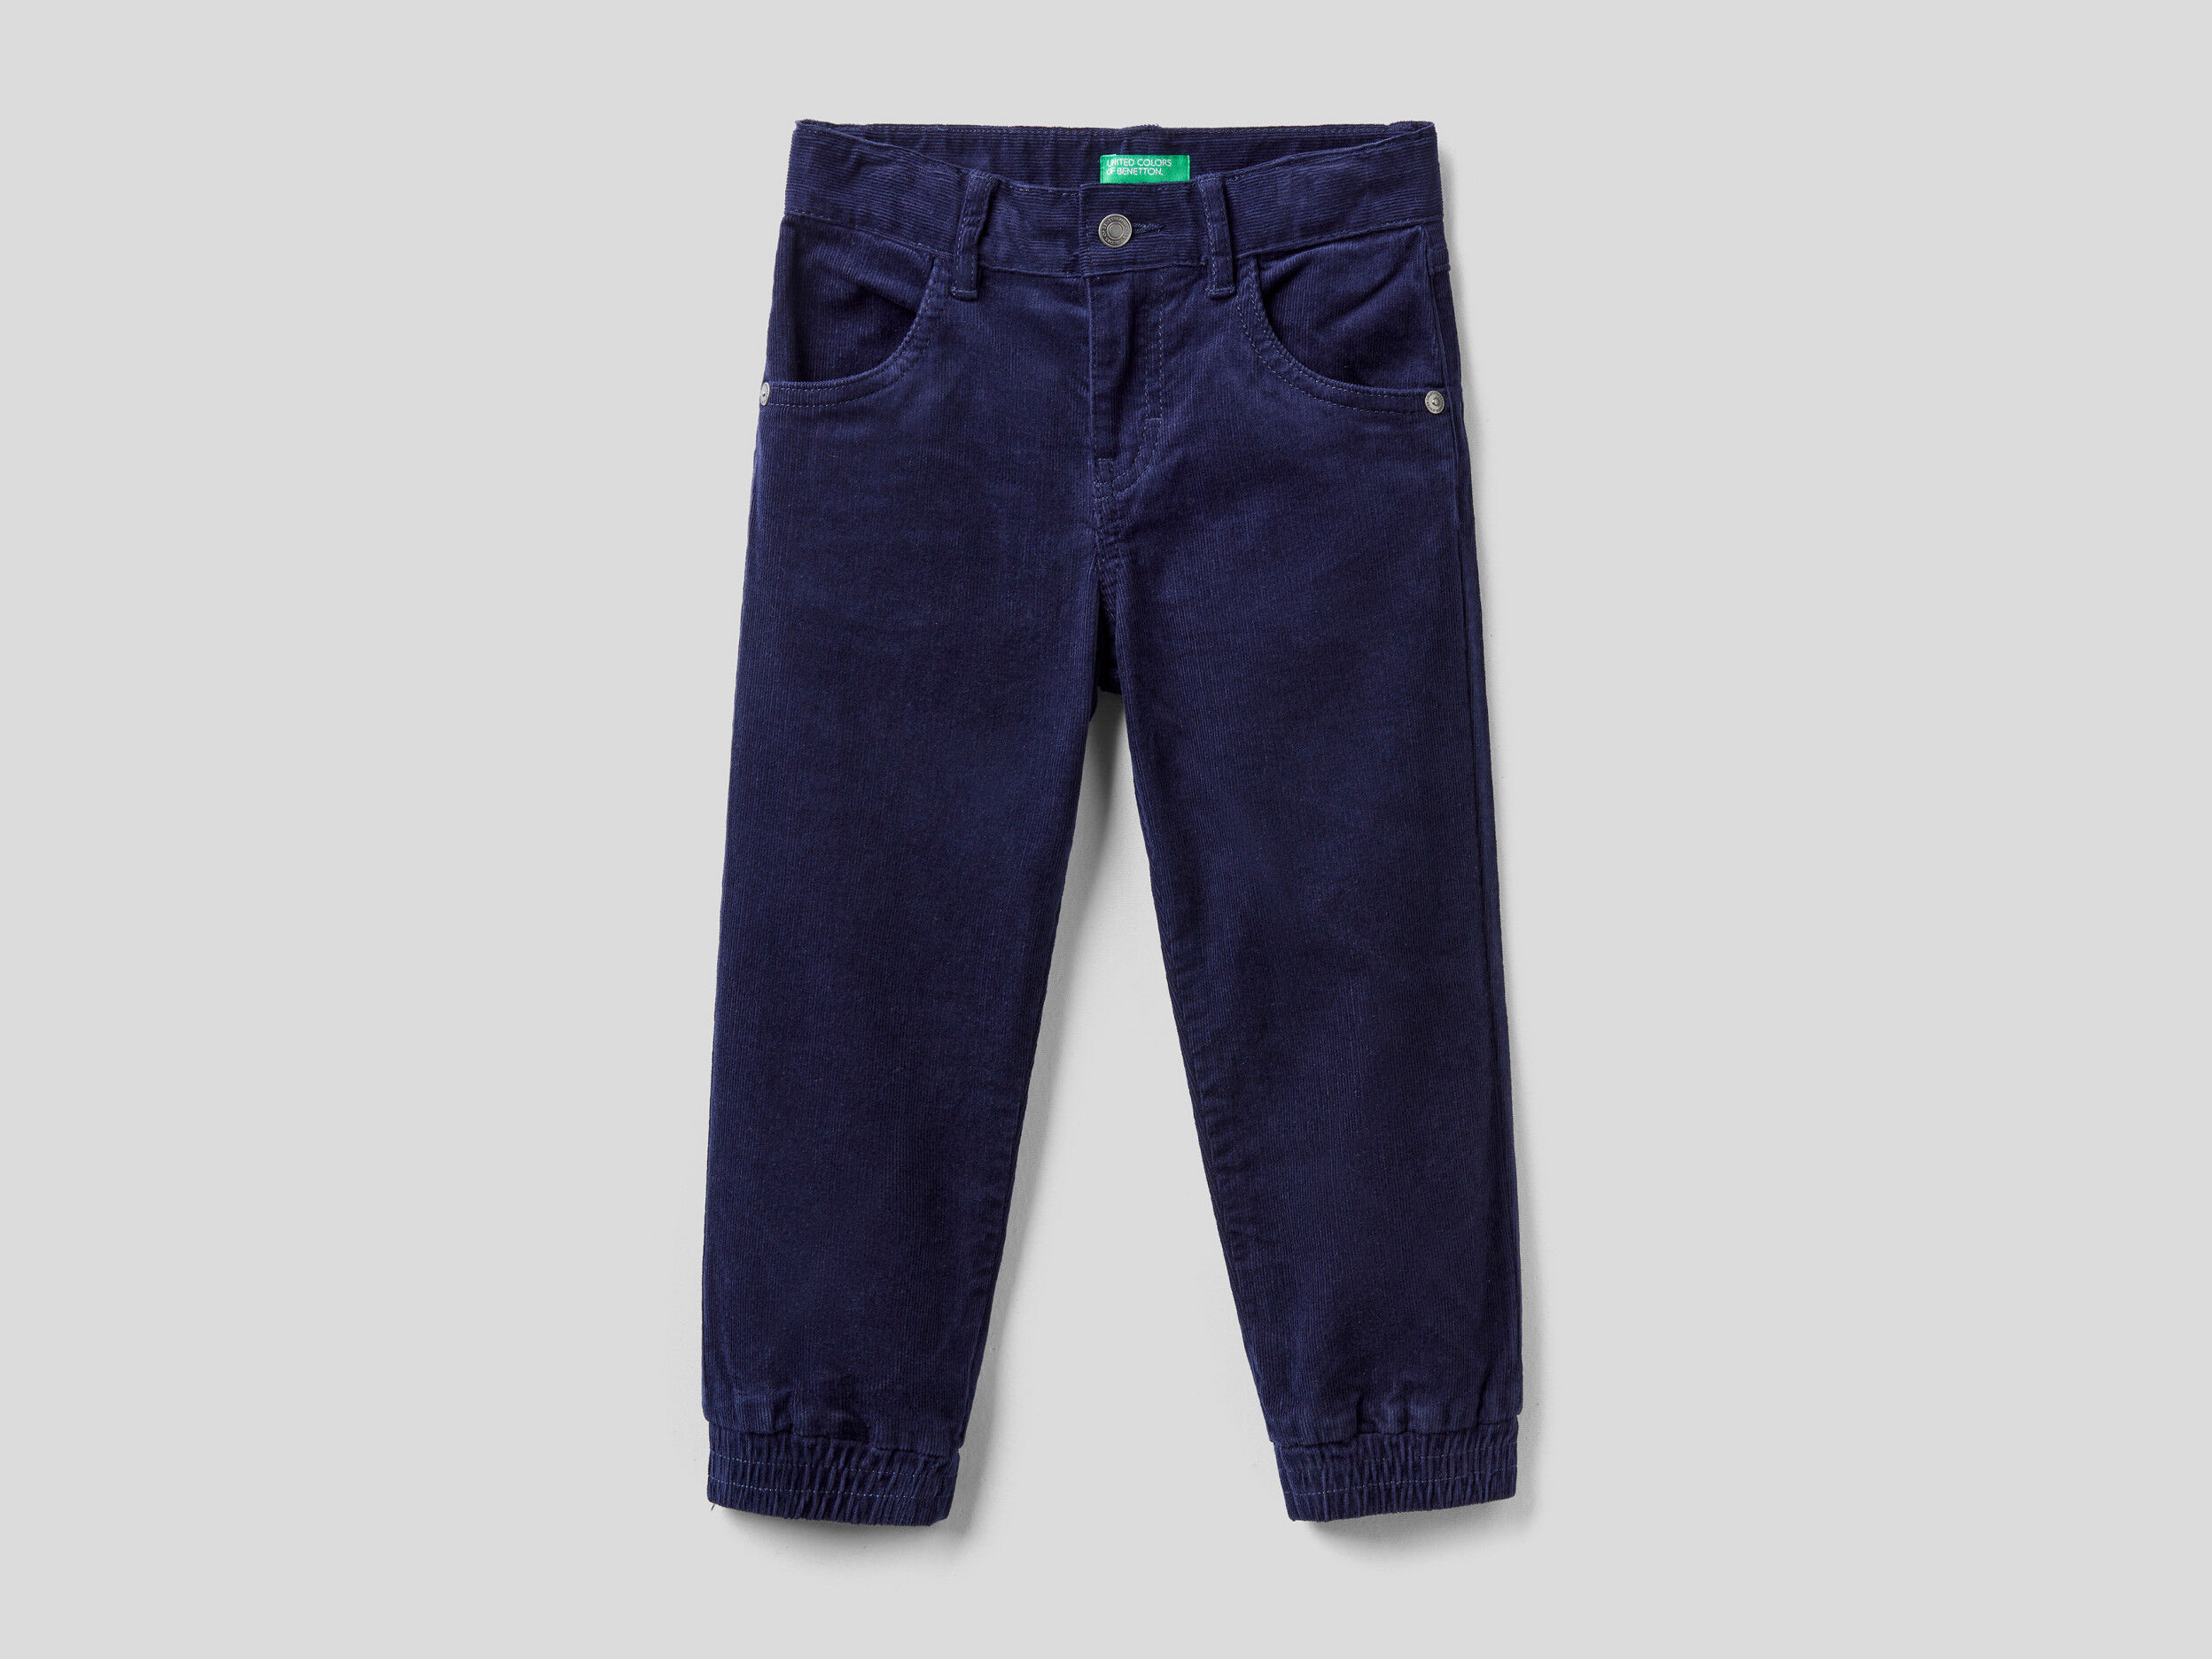 Pantaloni In Velluto Stretch United Colors of Benetton Abbigliamento Pantaloni e jeans Pantaloni Pantaloni stretch 